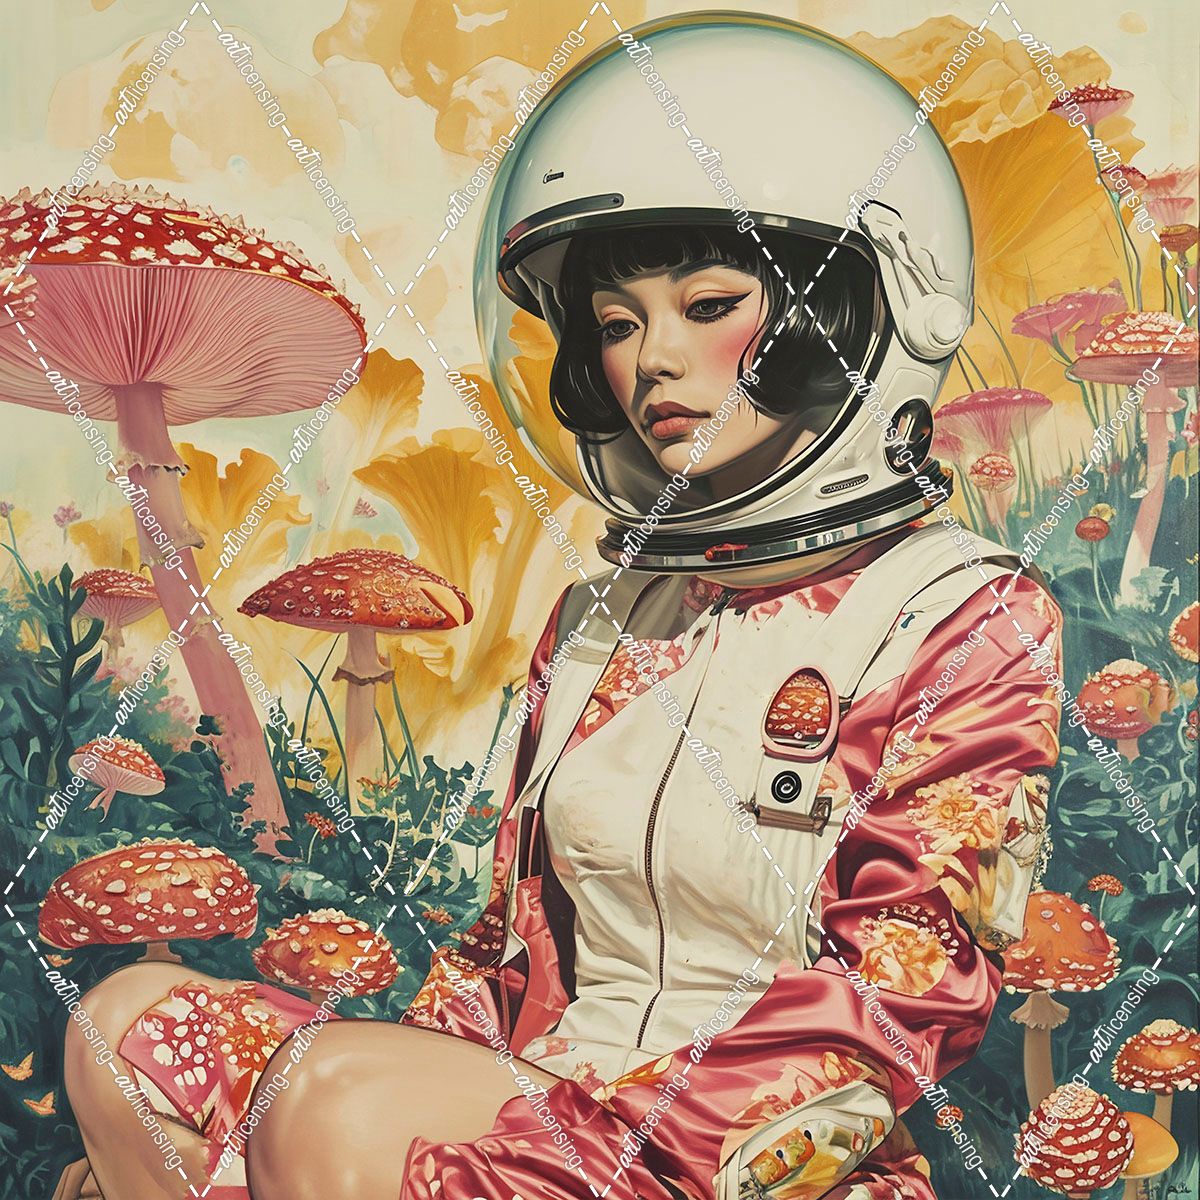 Astro Woman Among the Mushrooms